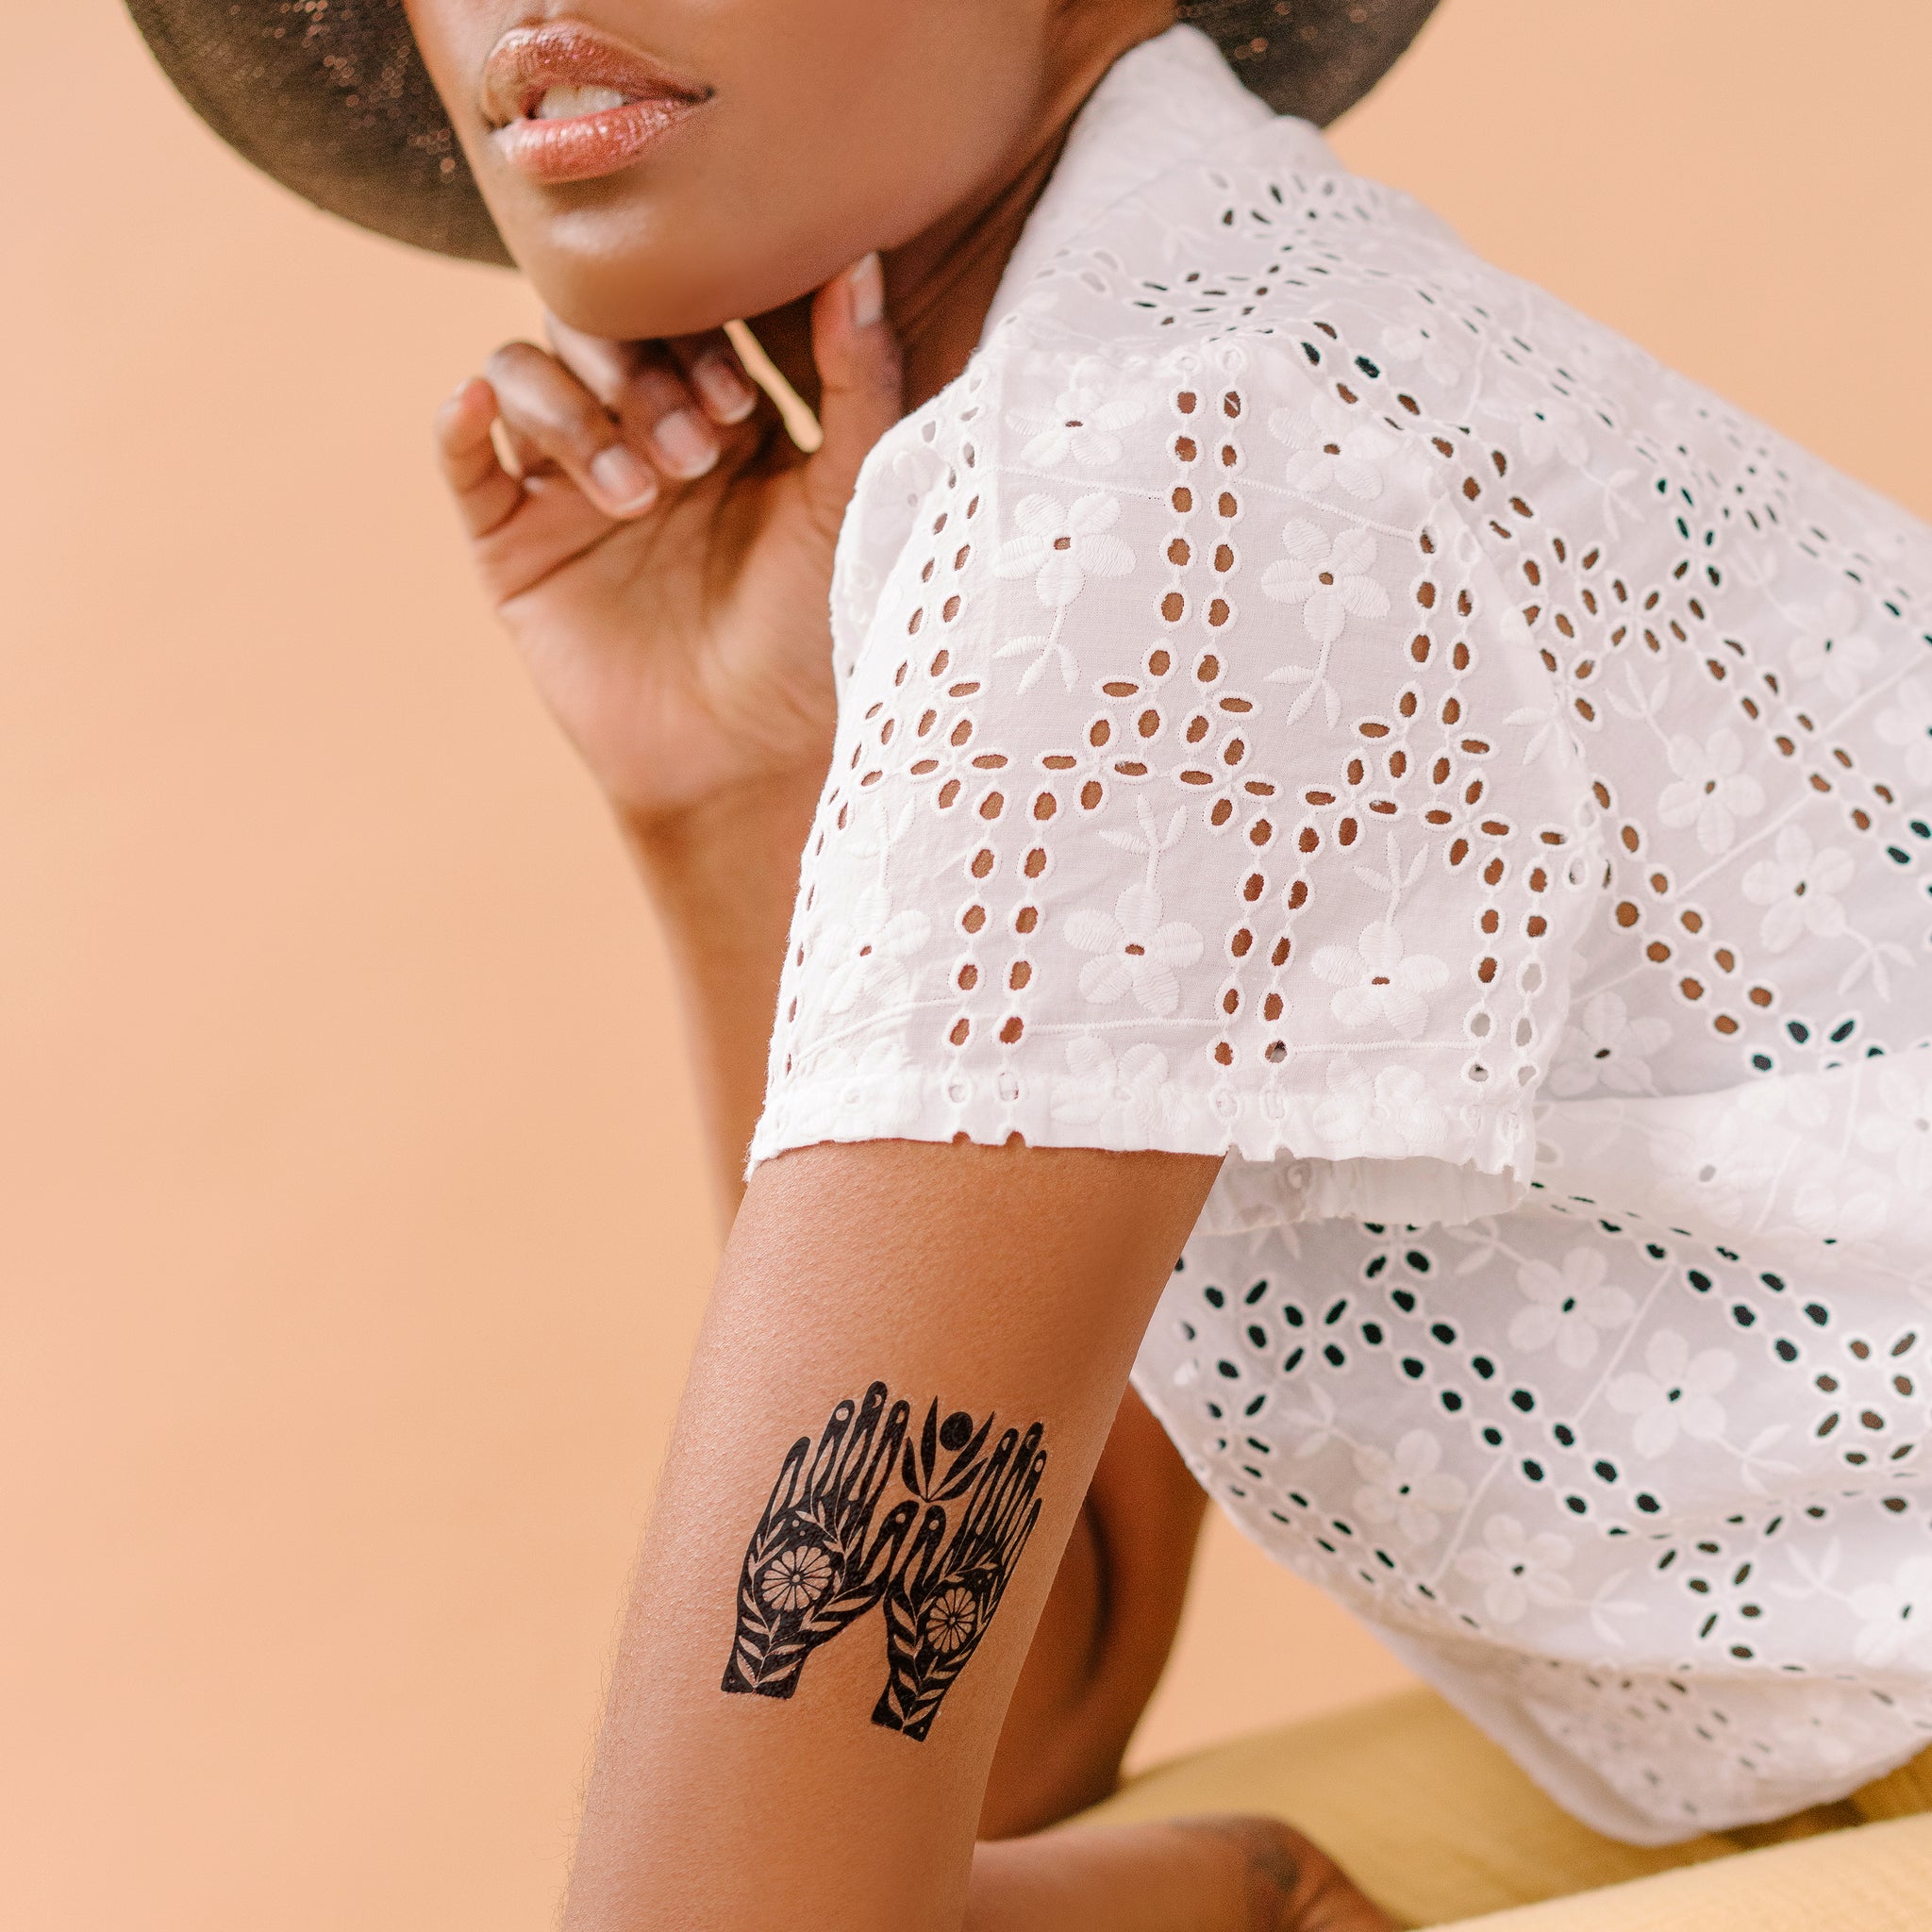 Tattoos That Symbolize Growth - AuthorityTattoo